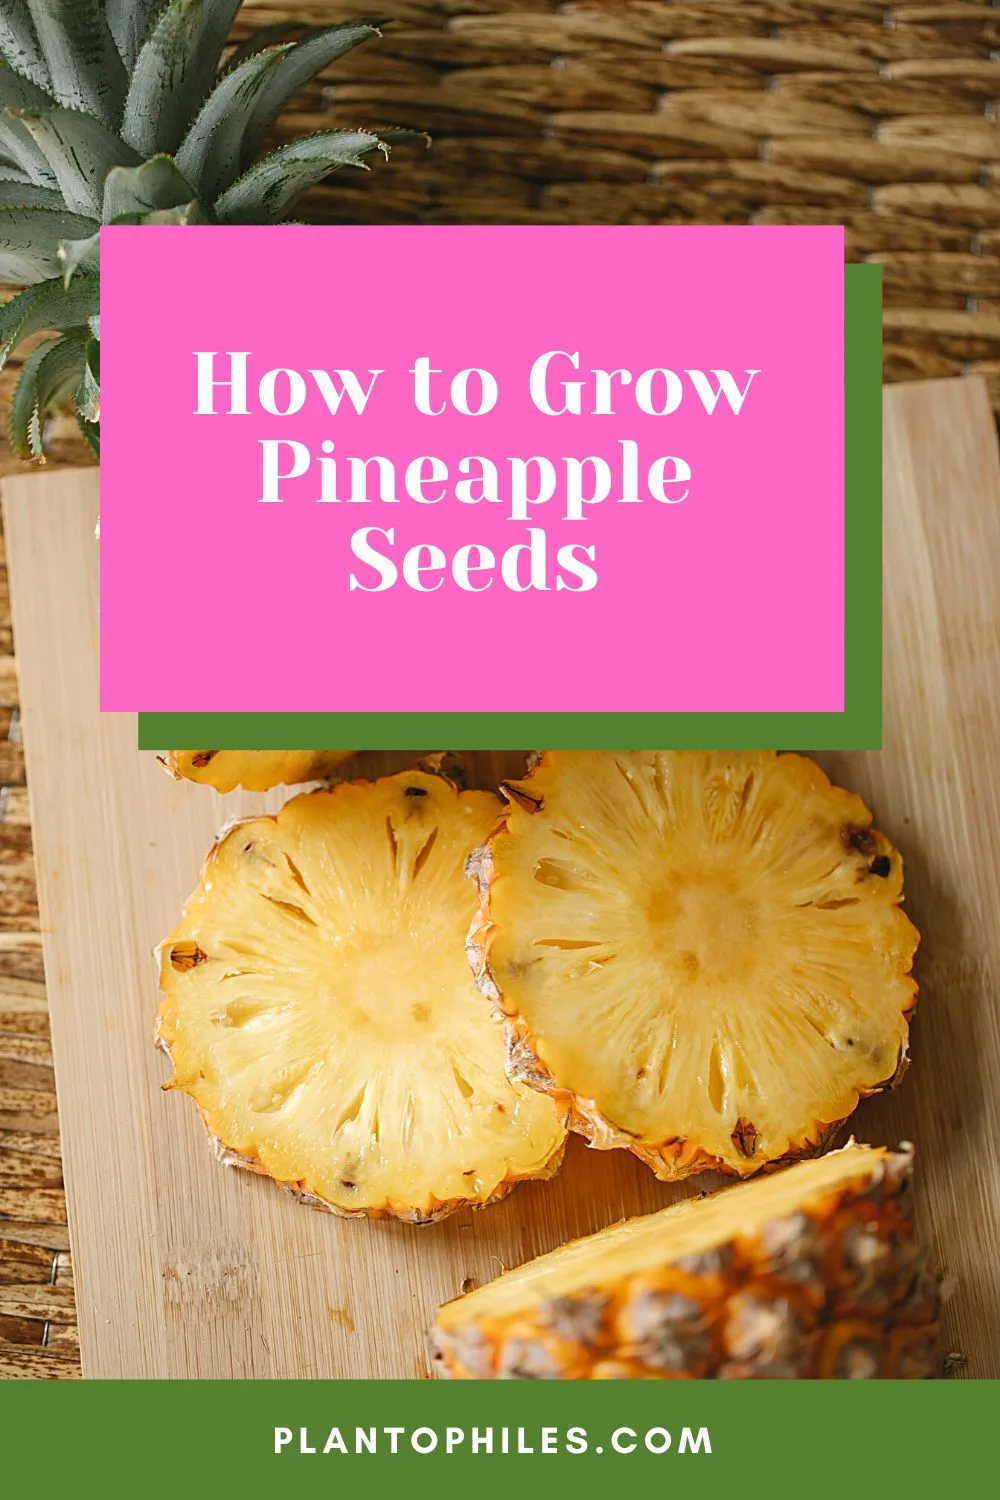 How to Grow Pineapple Seeds